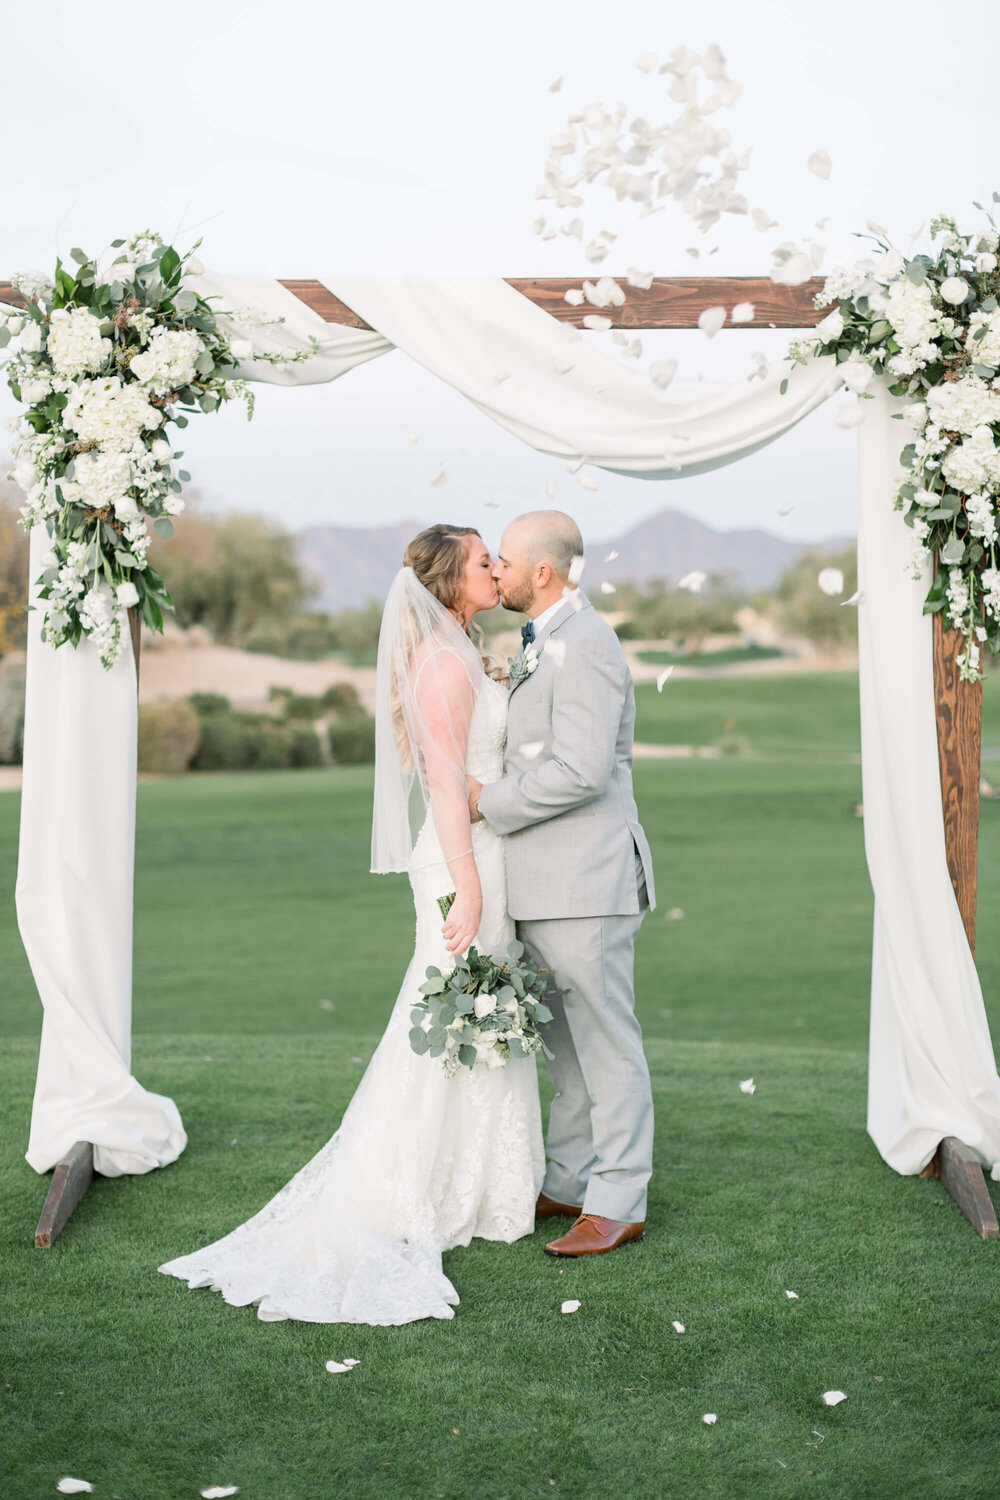 Wedding ceremony site at Gainey Ranch Golf Club in Scottsdale, Arizona